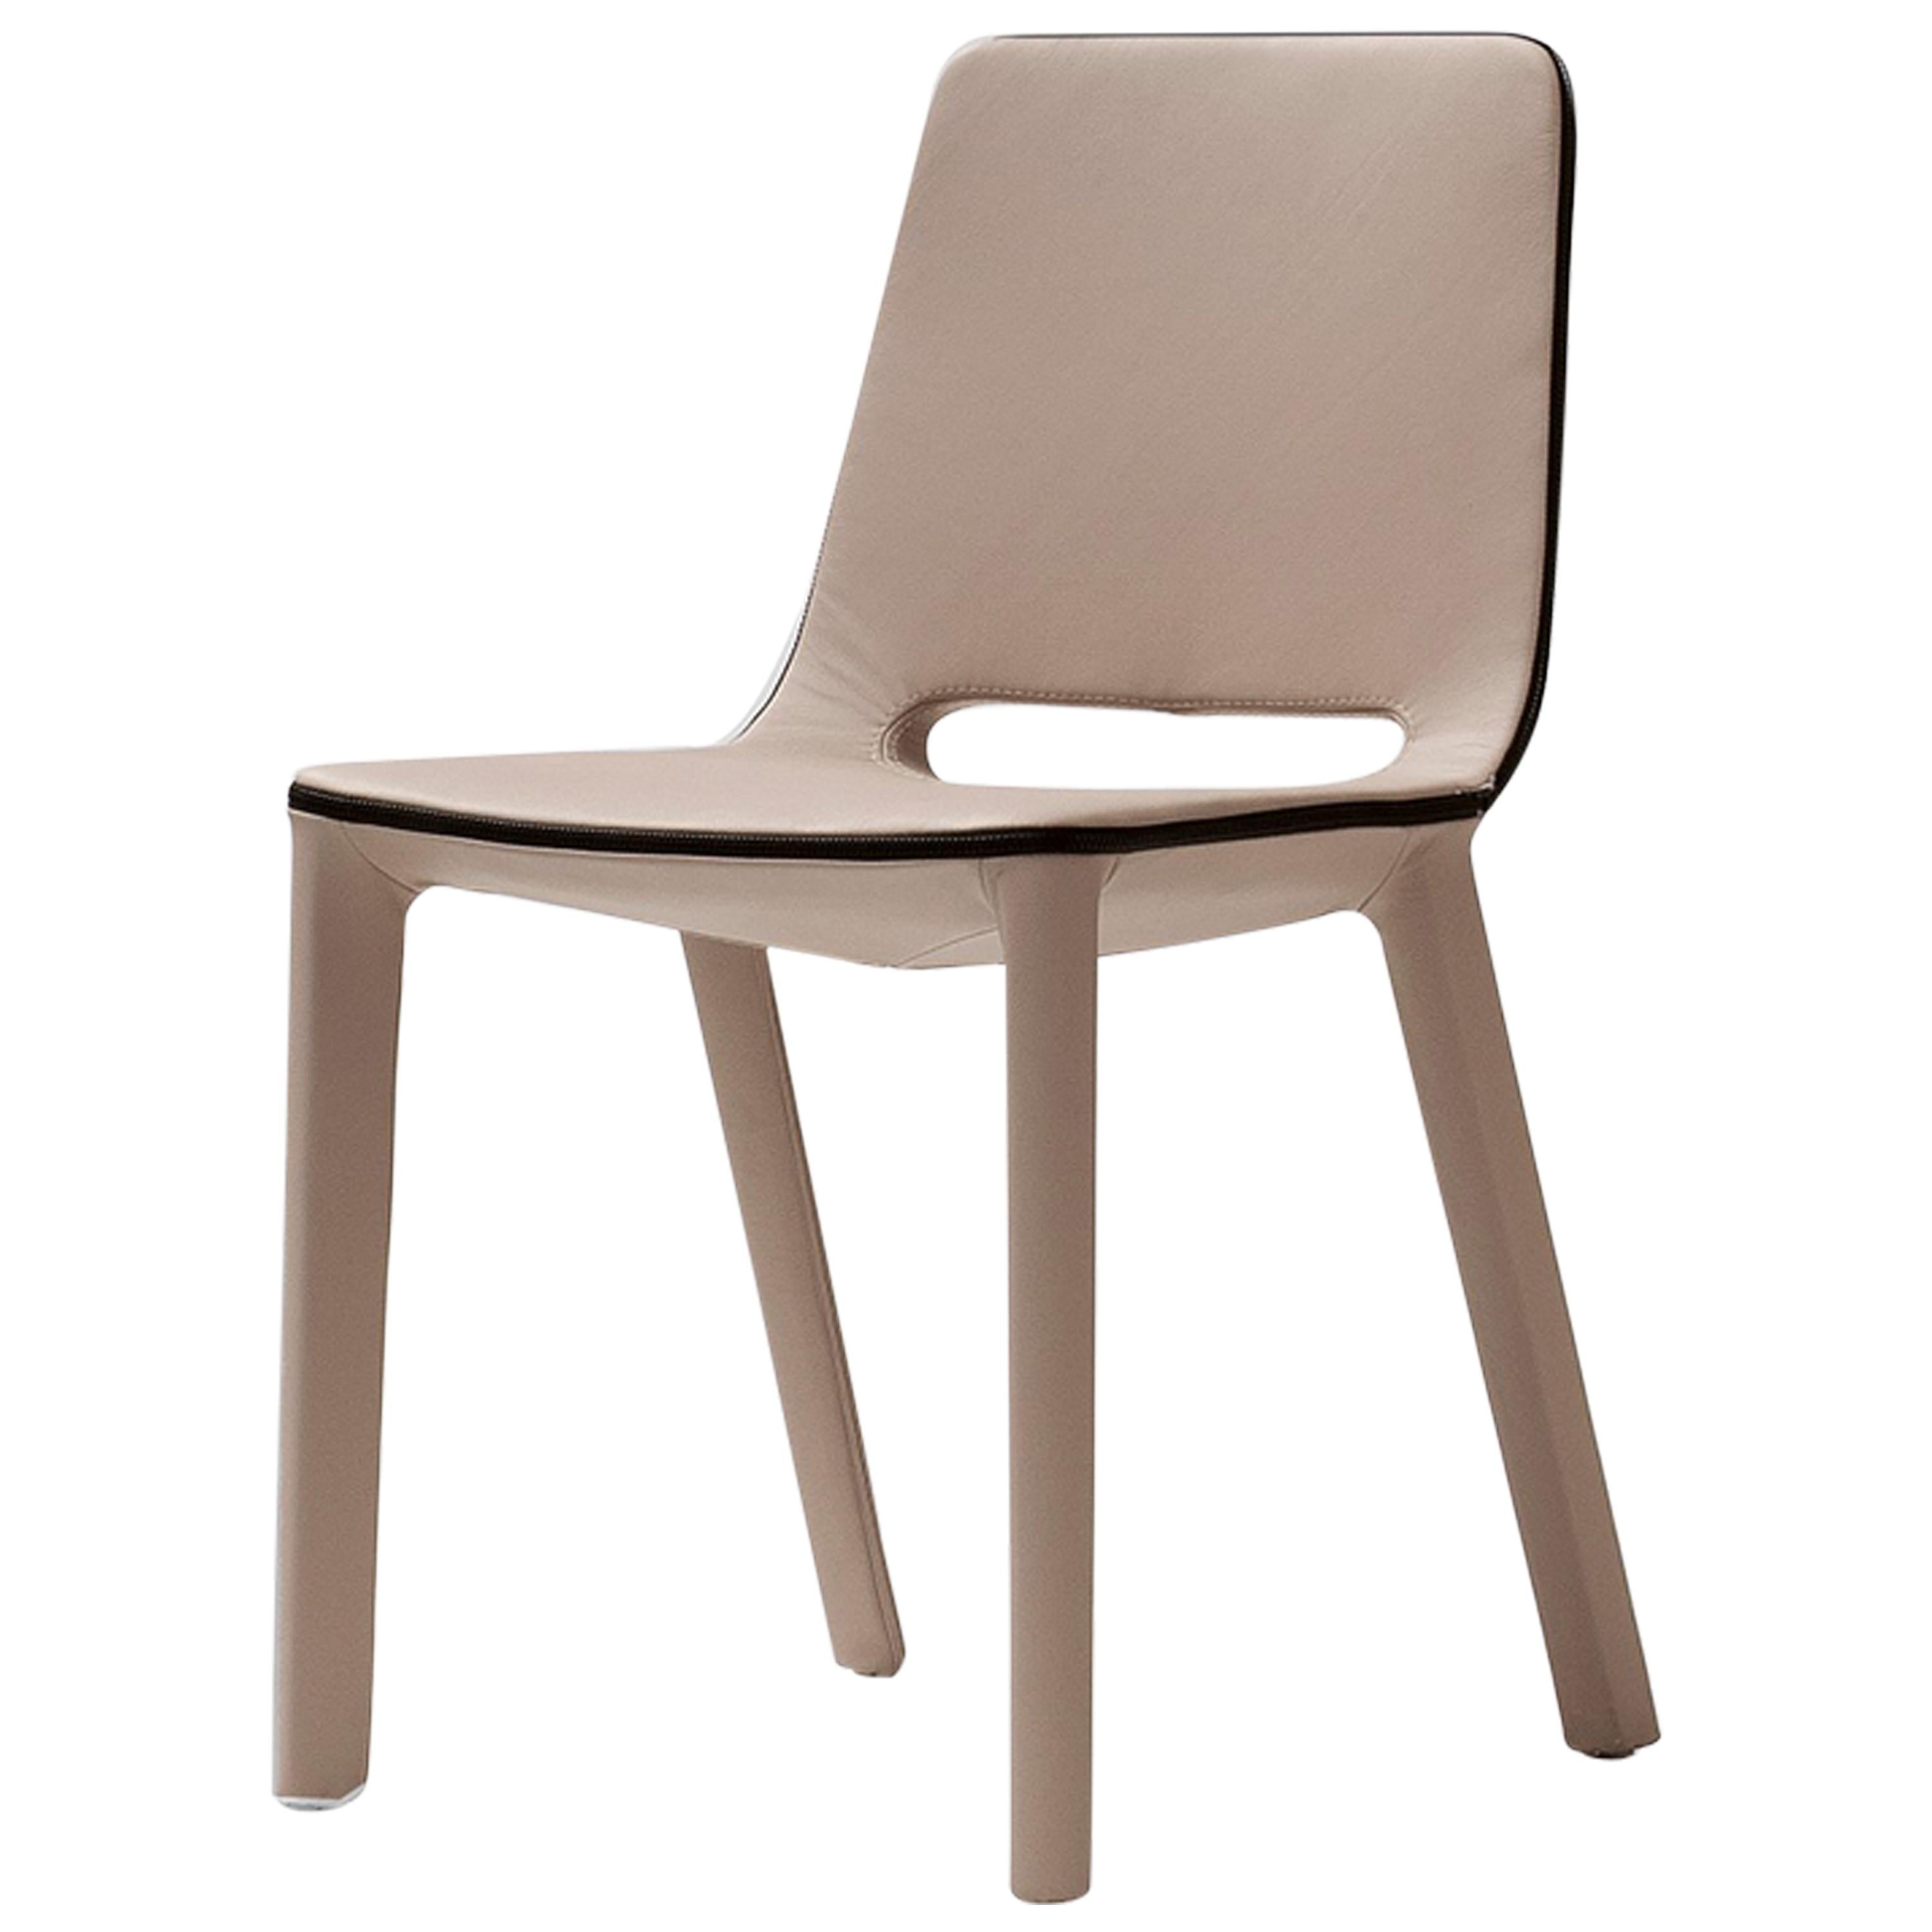 Bonaldo Kamar Chair in Beige Leather by Mauro Lipparini For Sale